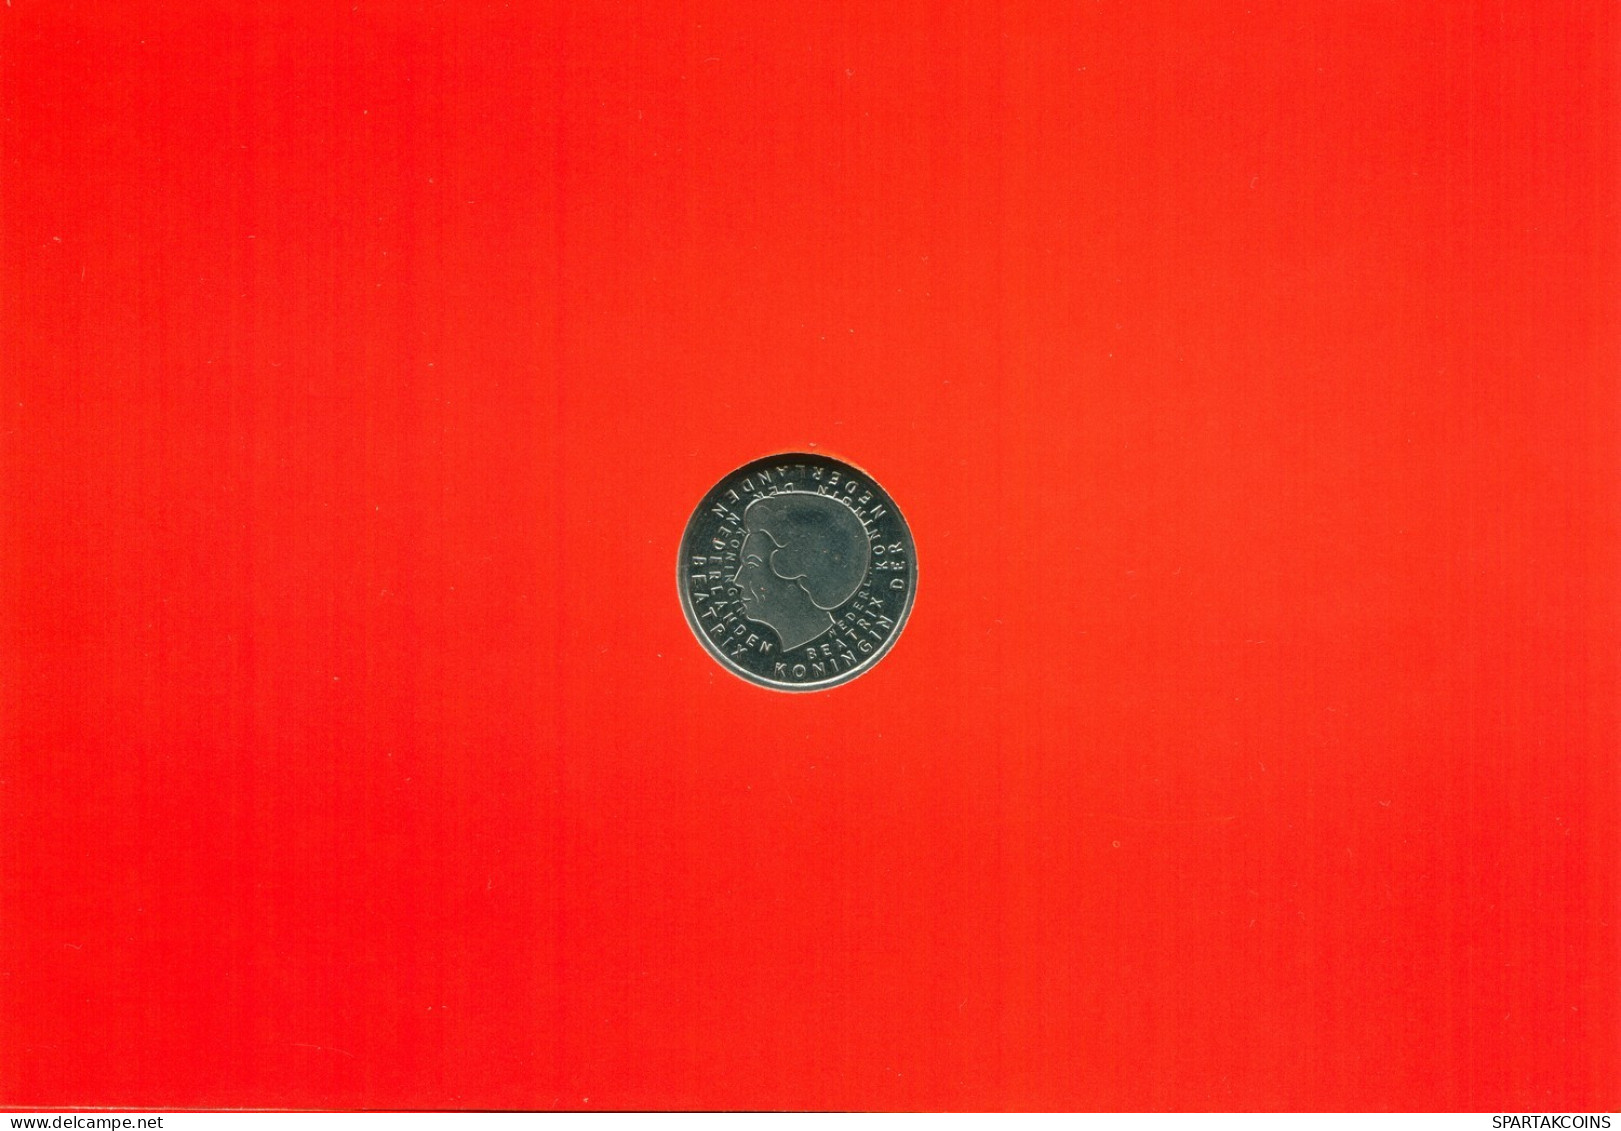 INÉERLANDAIS NETHERLANDS 2001 1 GULDEN Last Gulden #SET1039.7.F.A - Jahressets & Polierte Platten